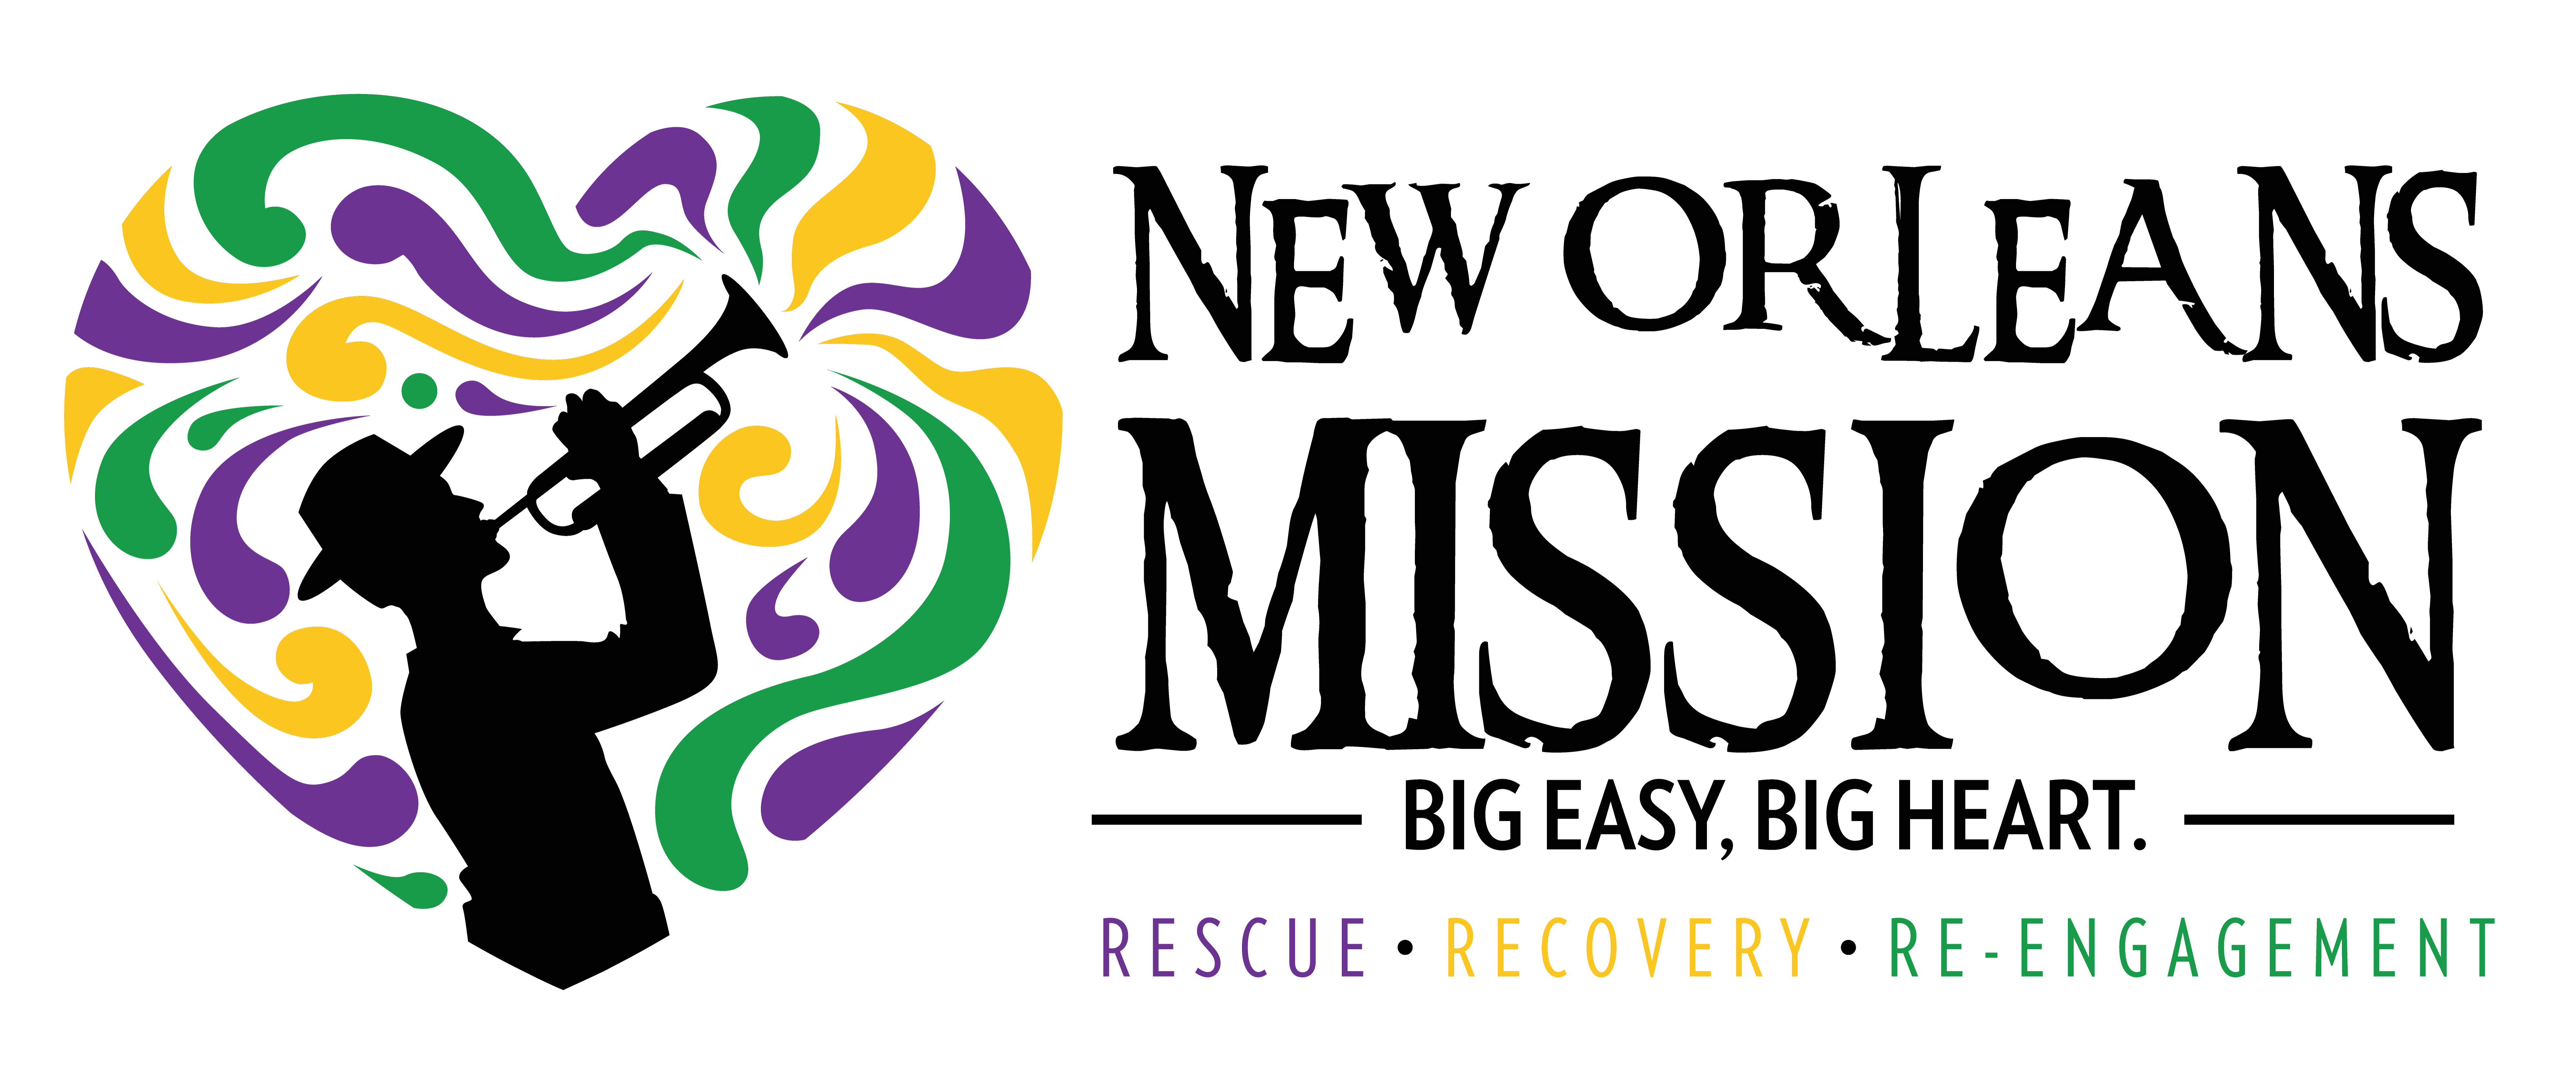 New Orleans Mission logo